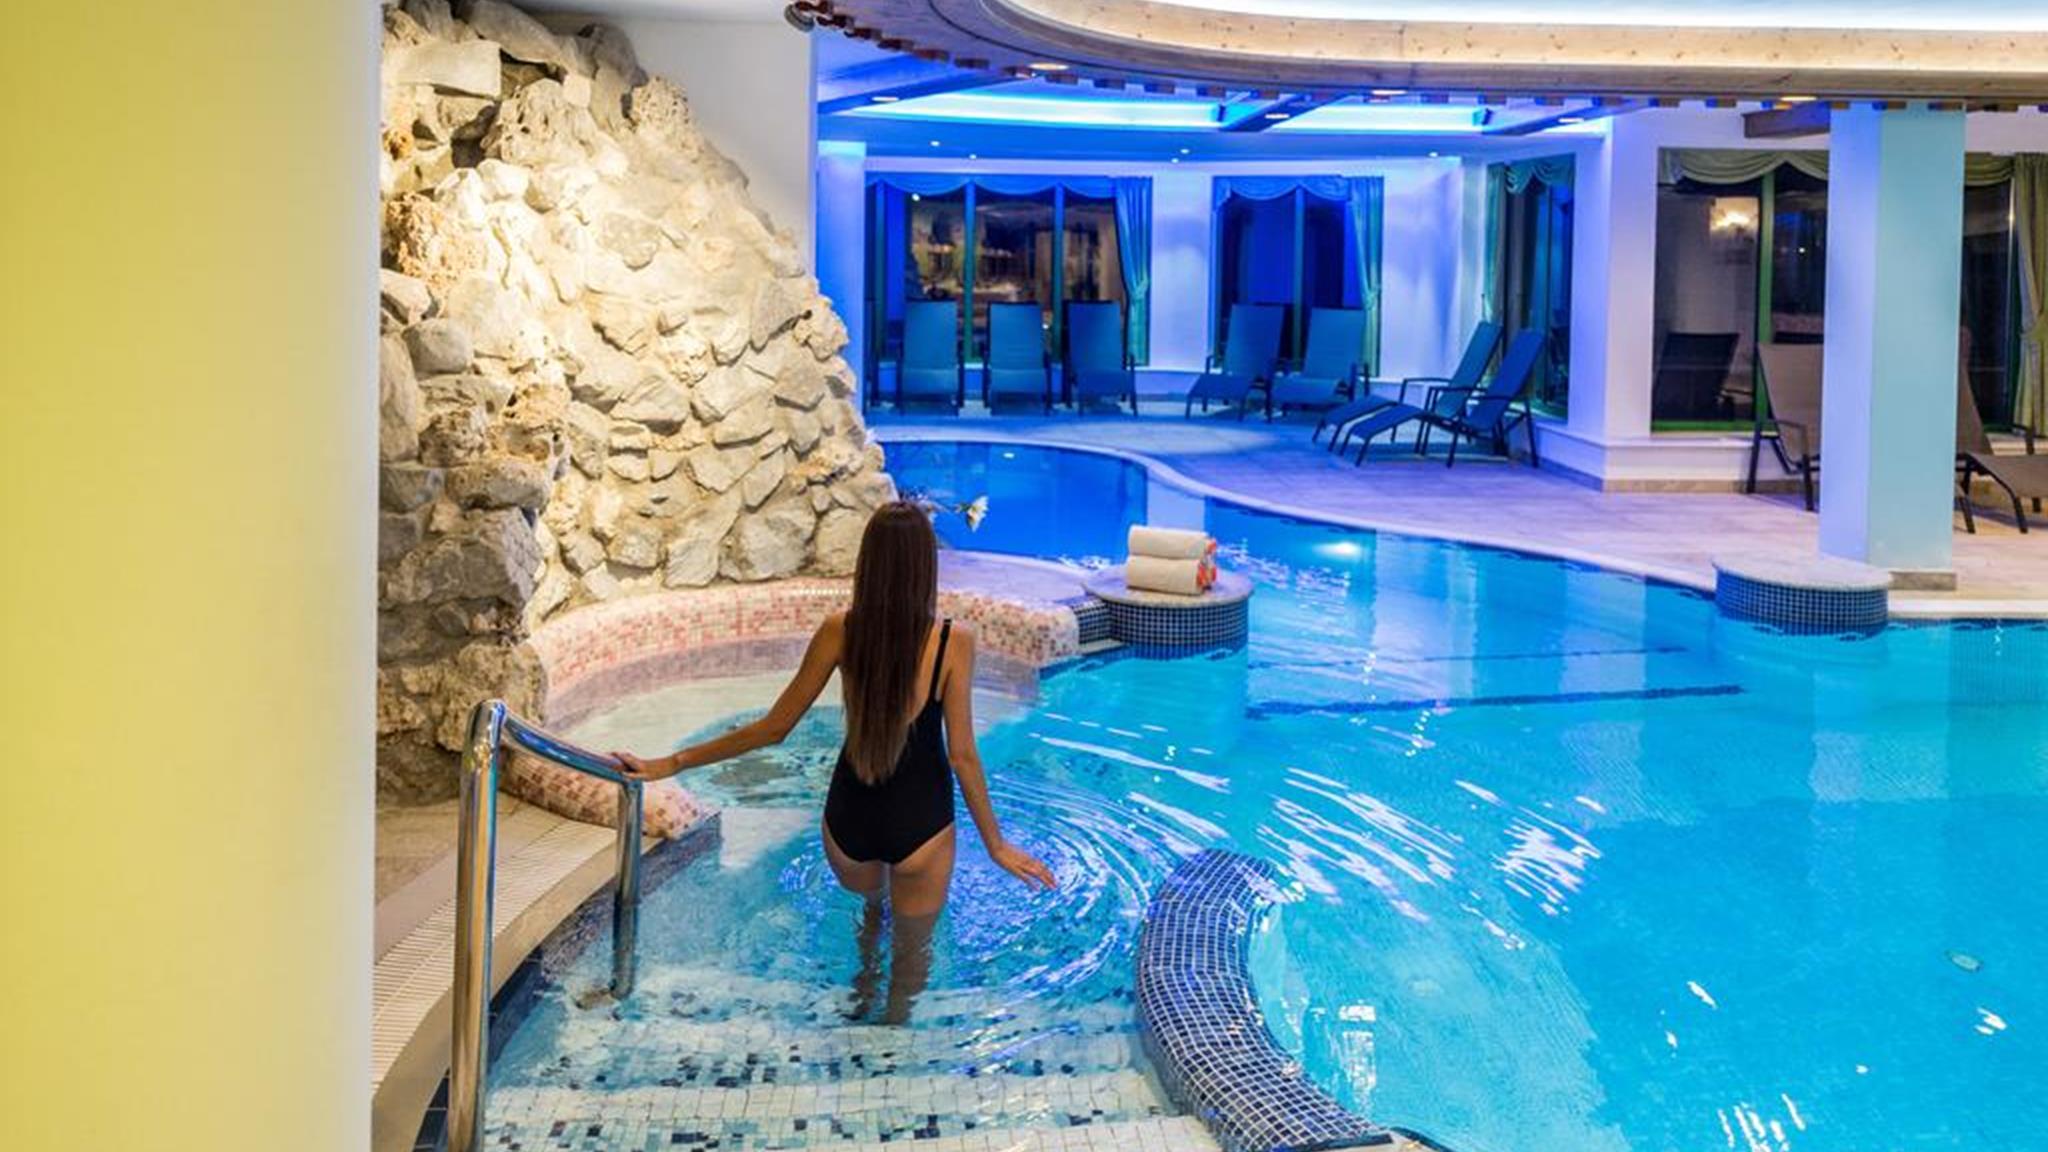 Tevini Dolomites Charming Hotel - Interior Swimming Pool and Jacuzzi